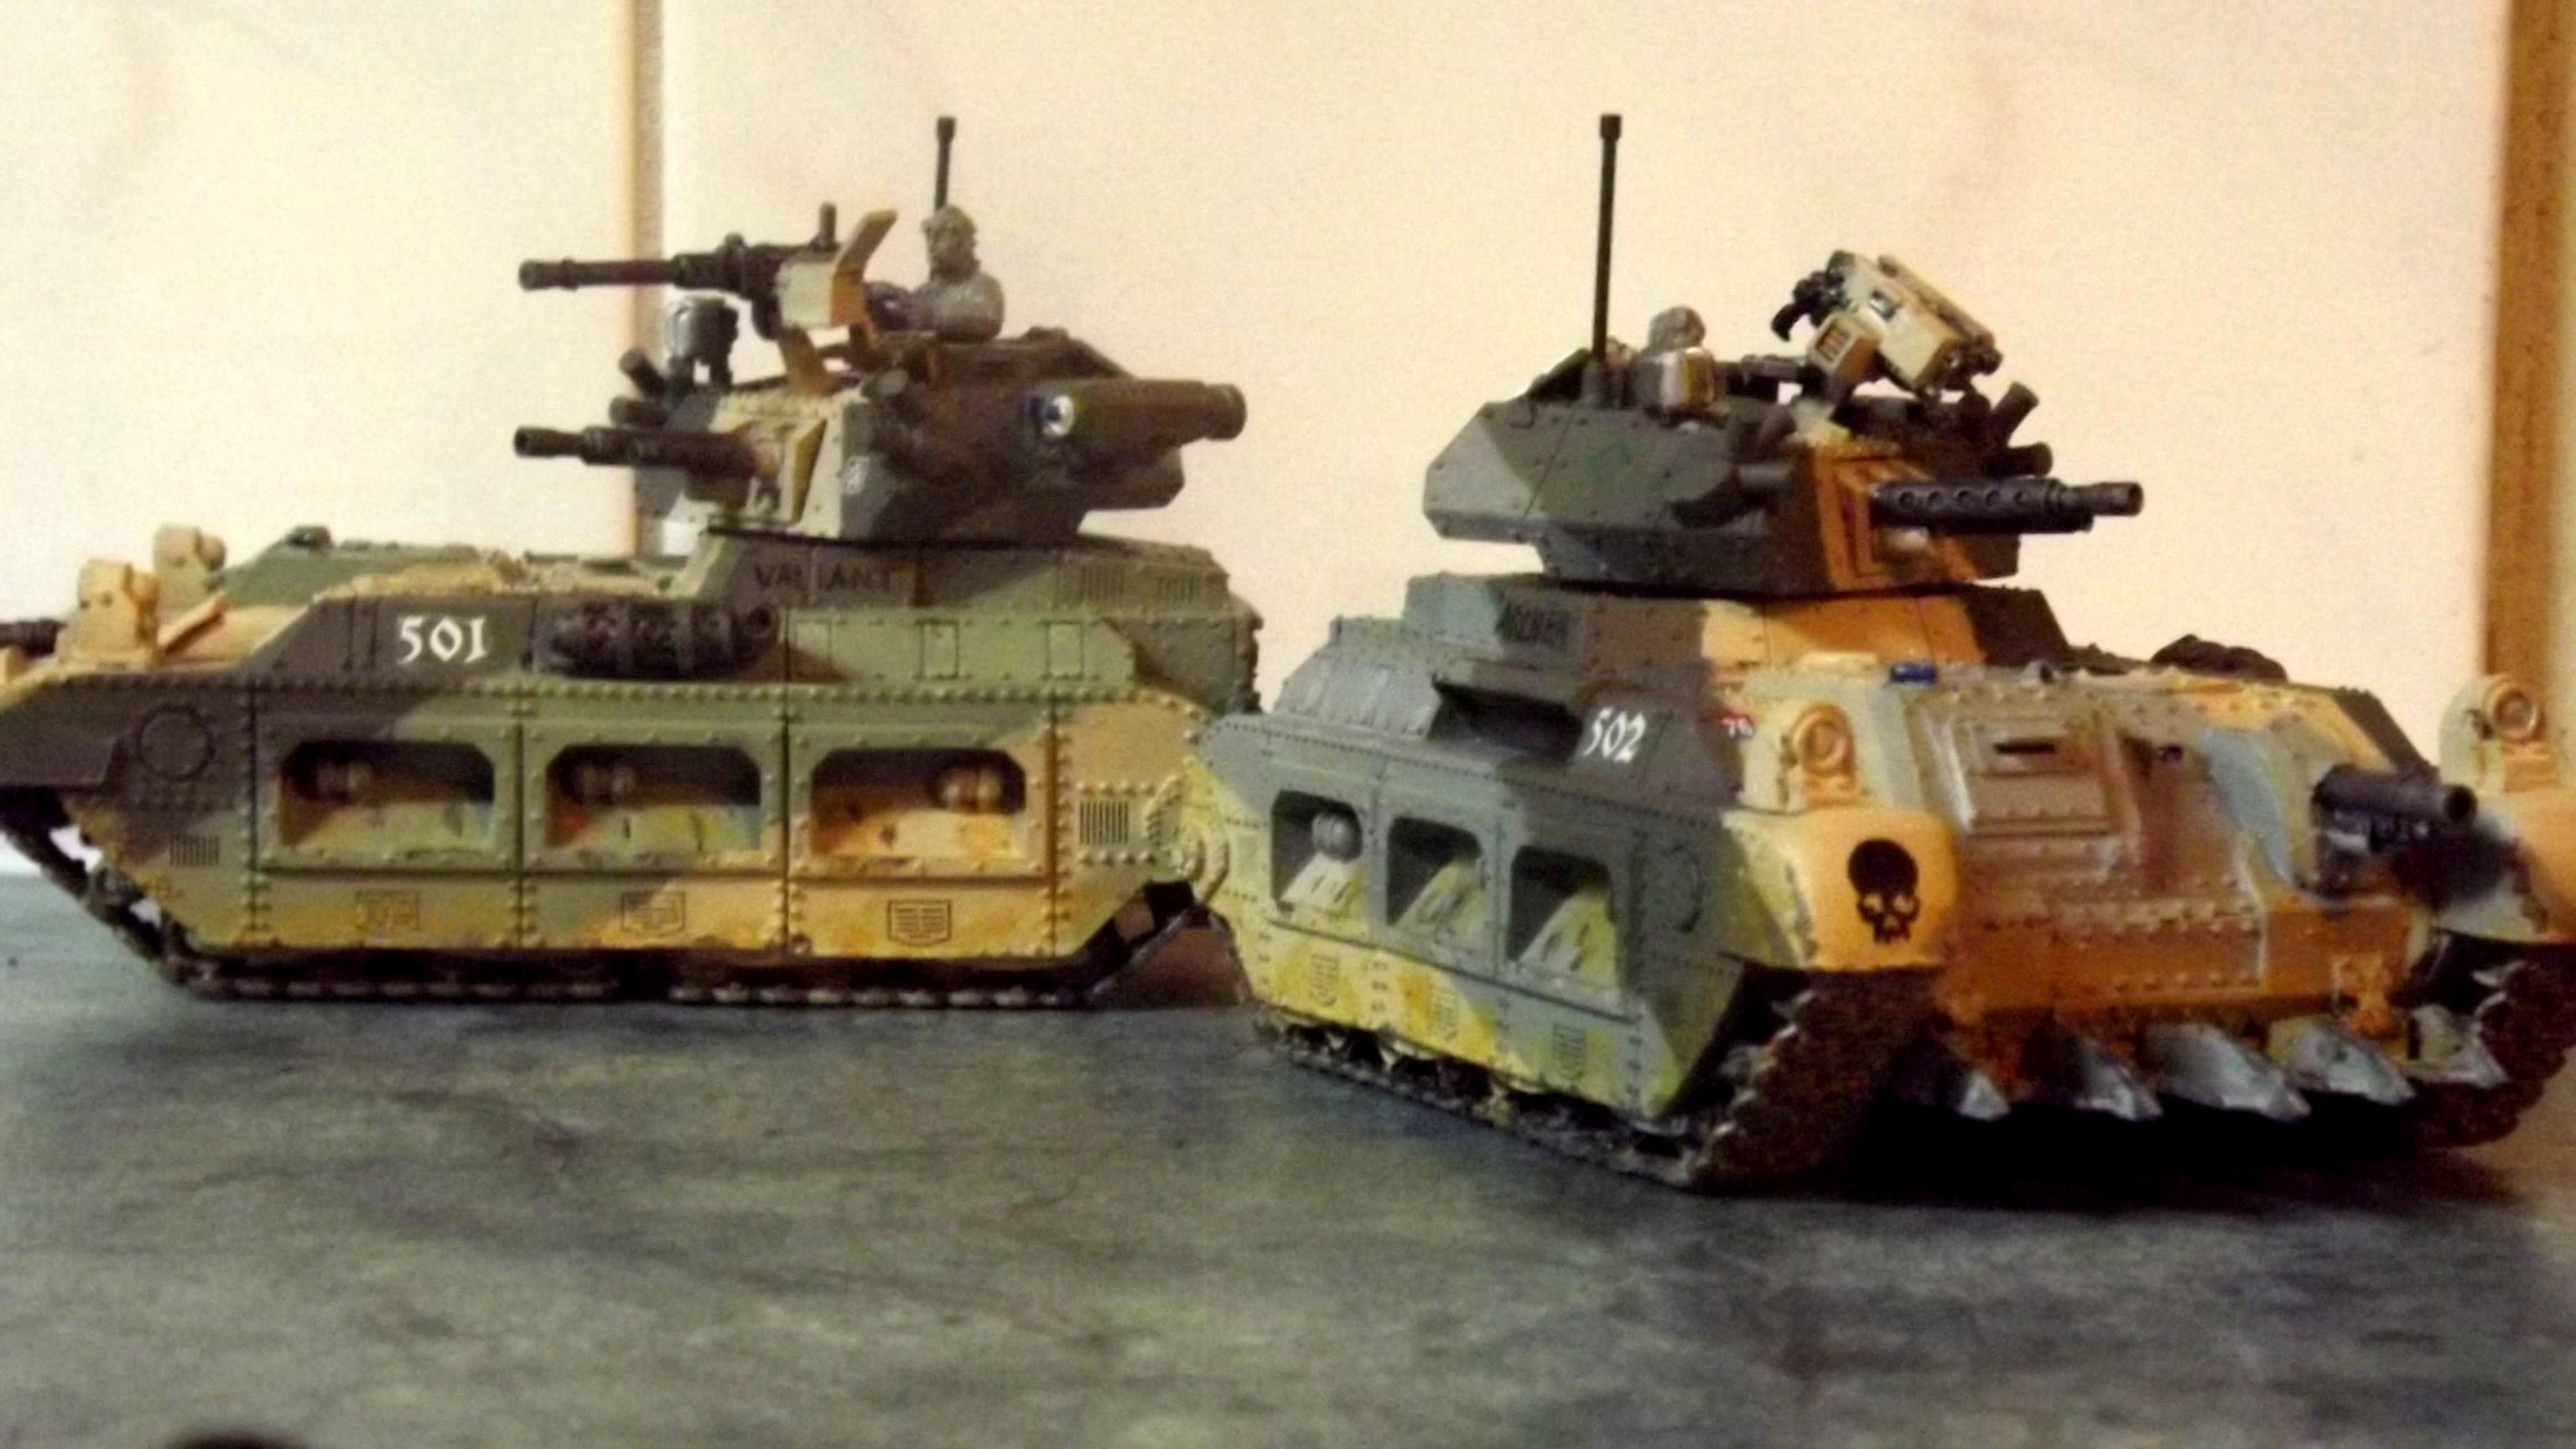 Cavalry Vehicle, Chimera, Crv, Ifv, Kangaroo, Recon, Shapeways, Tank, Victoria Miniatures